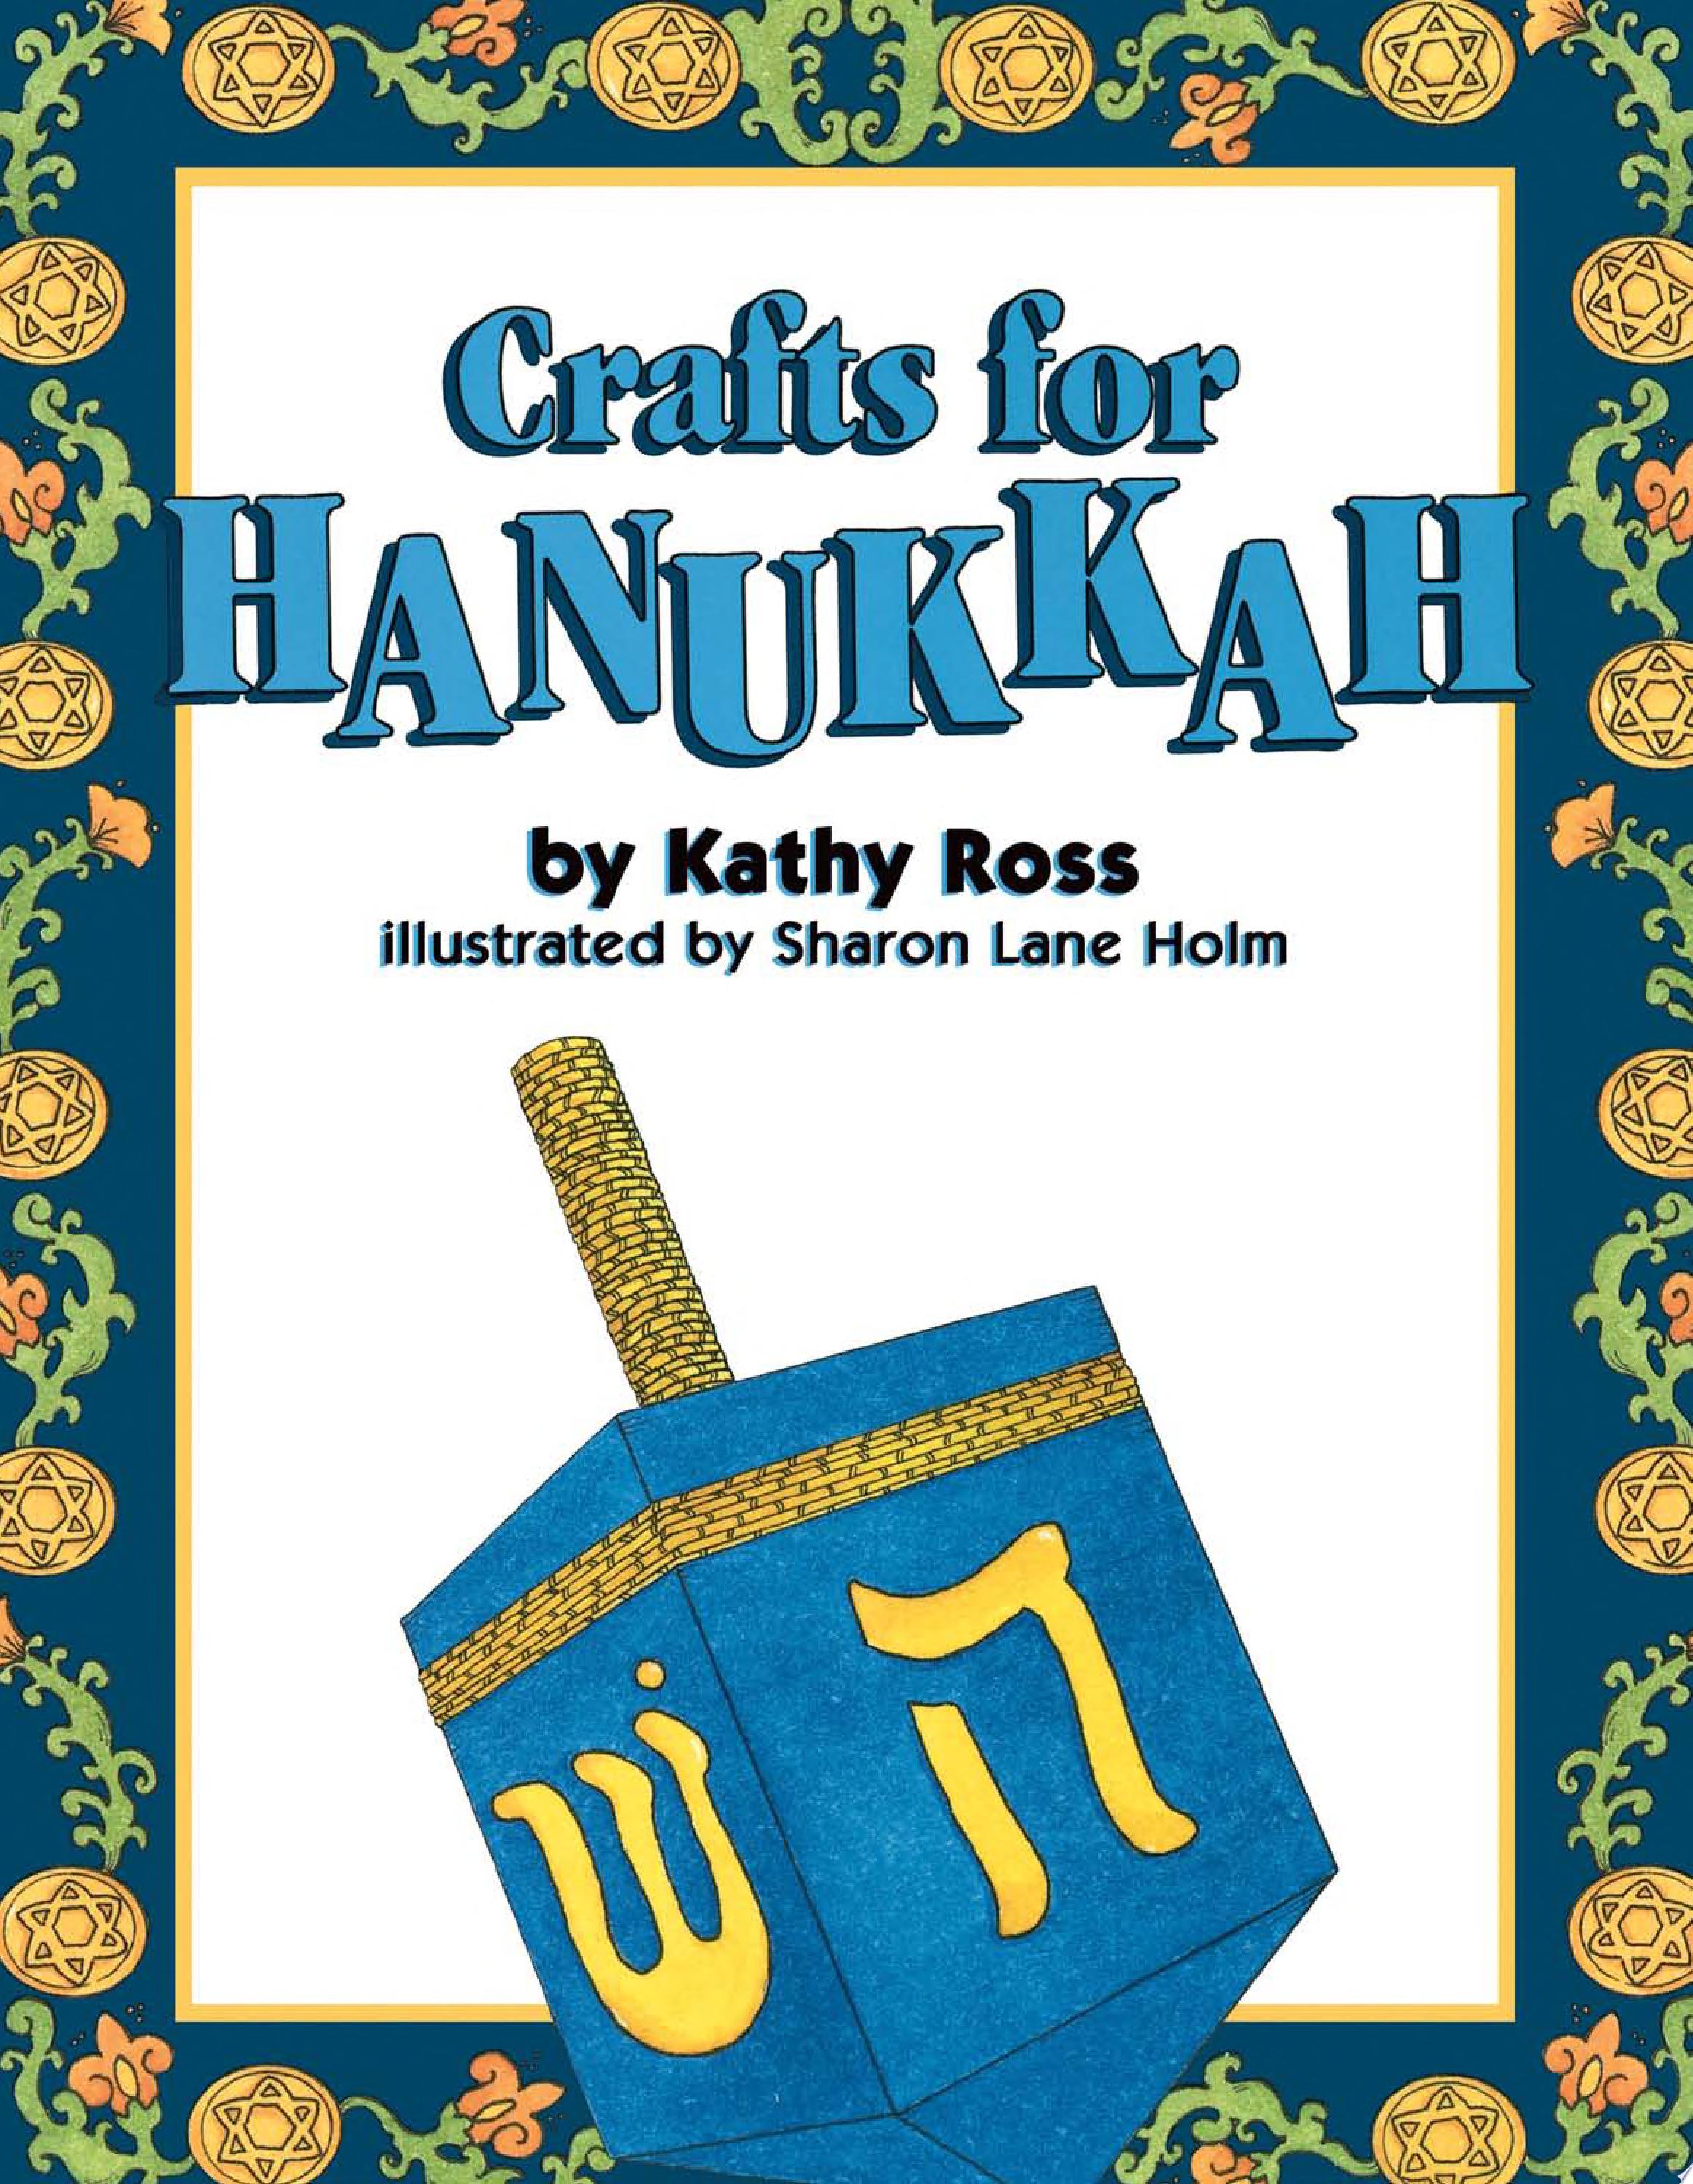 Image for "Crafts for Hanukkah"